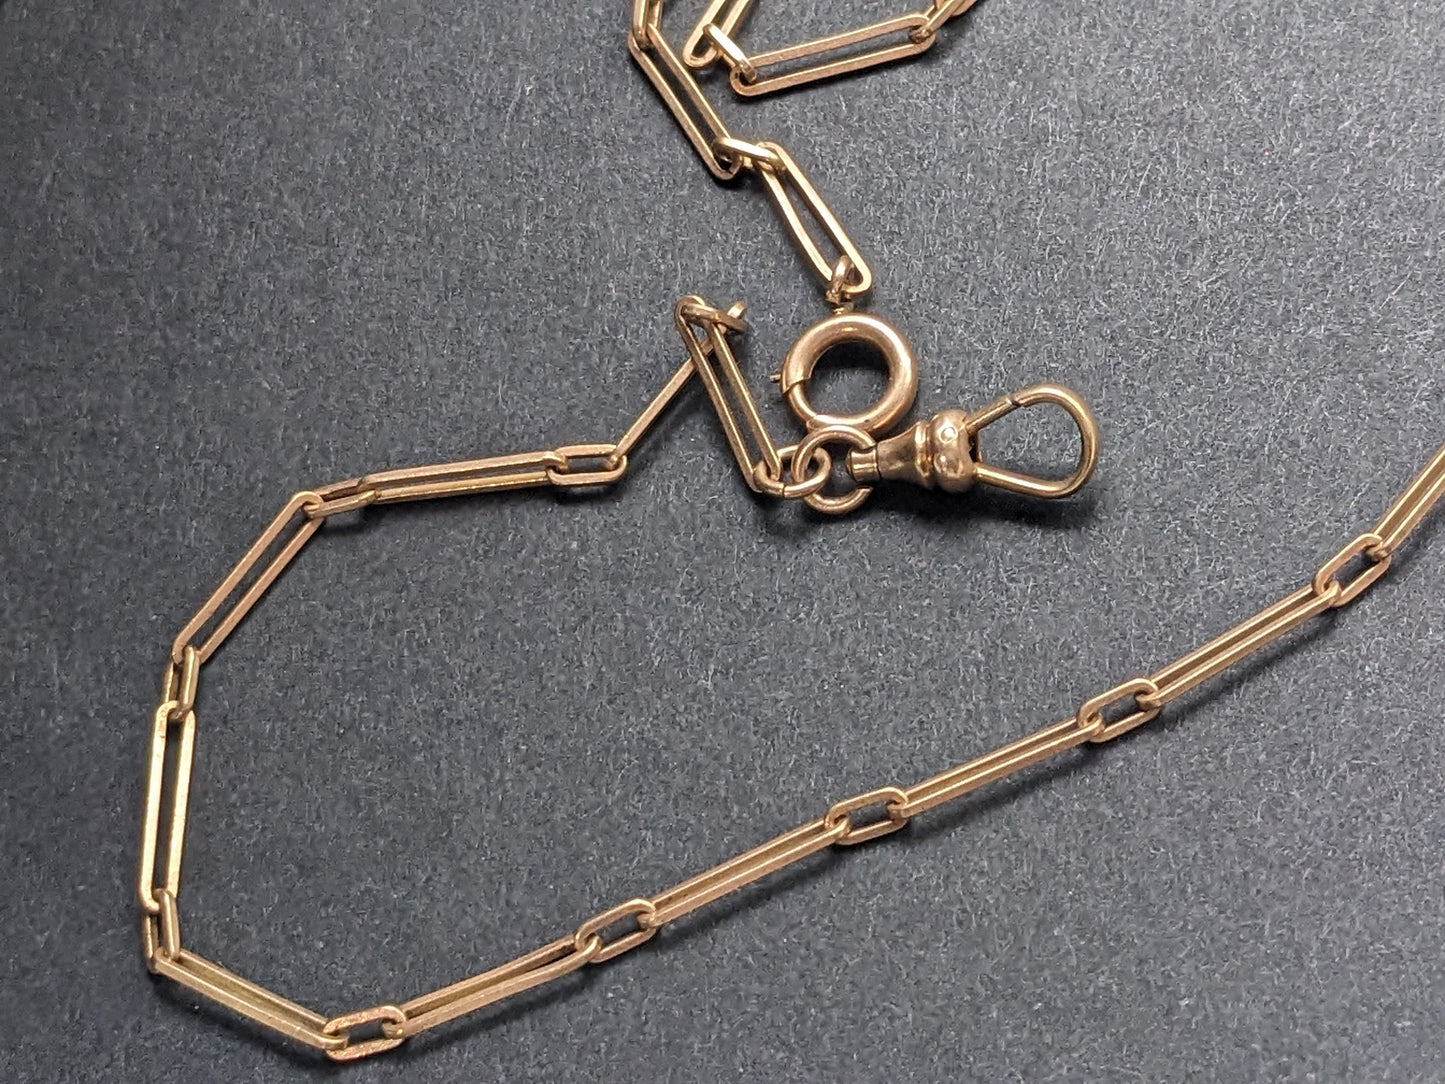 10k watch chain with original dog clip